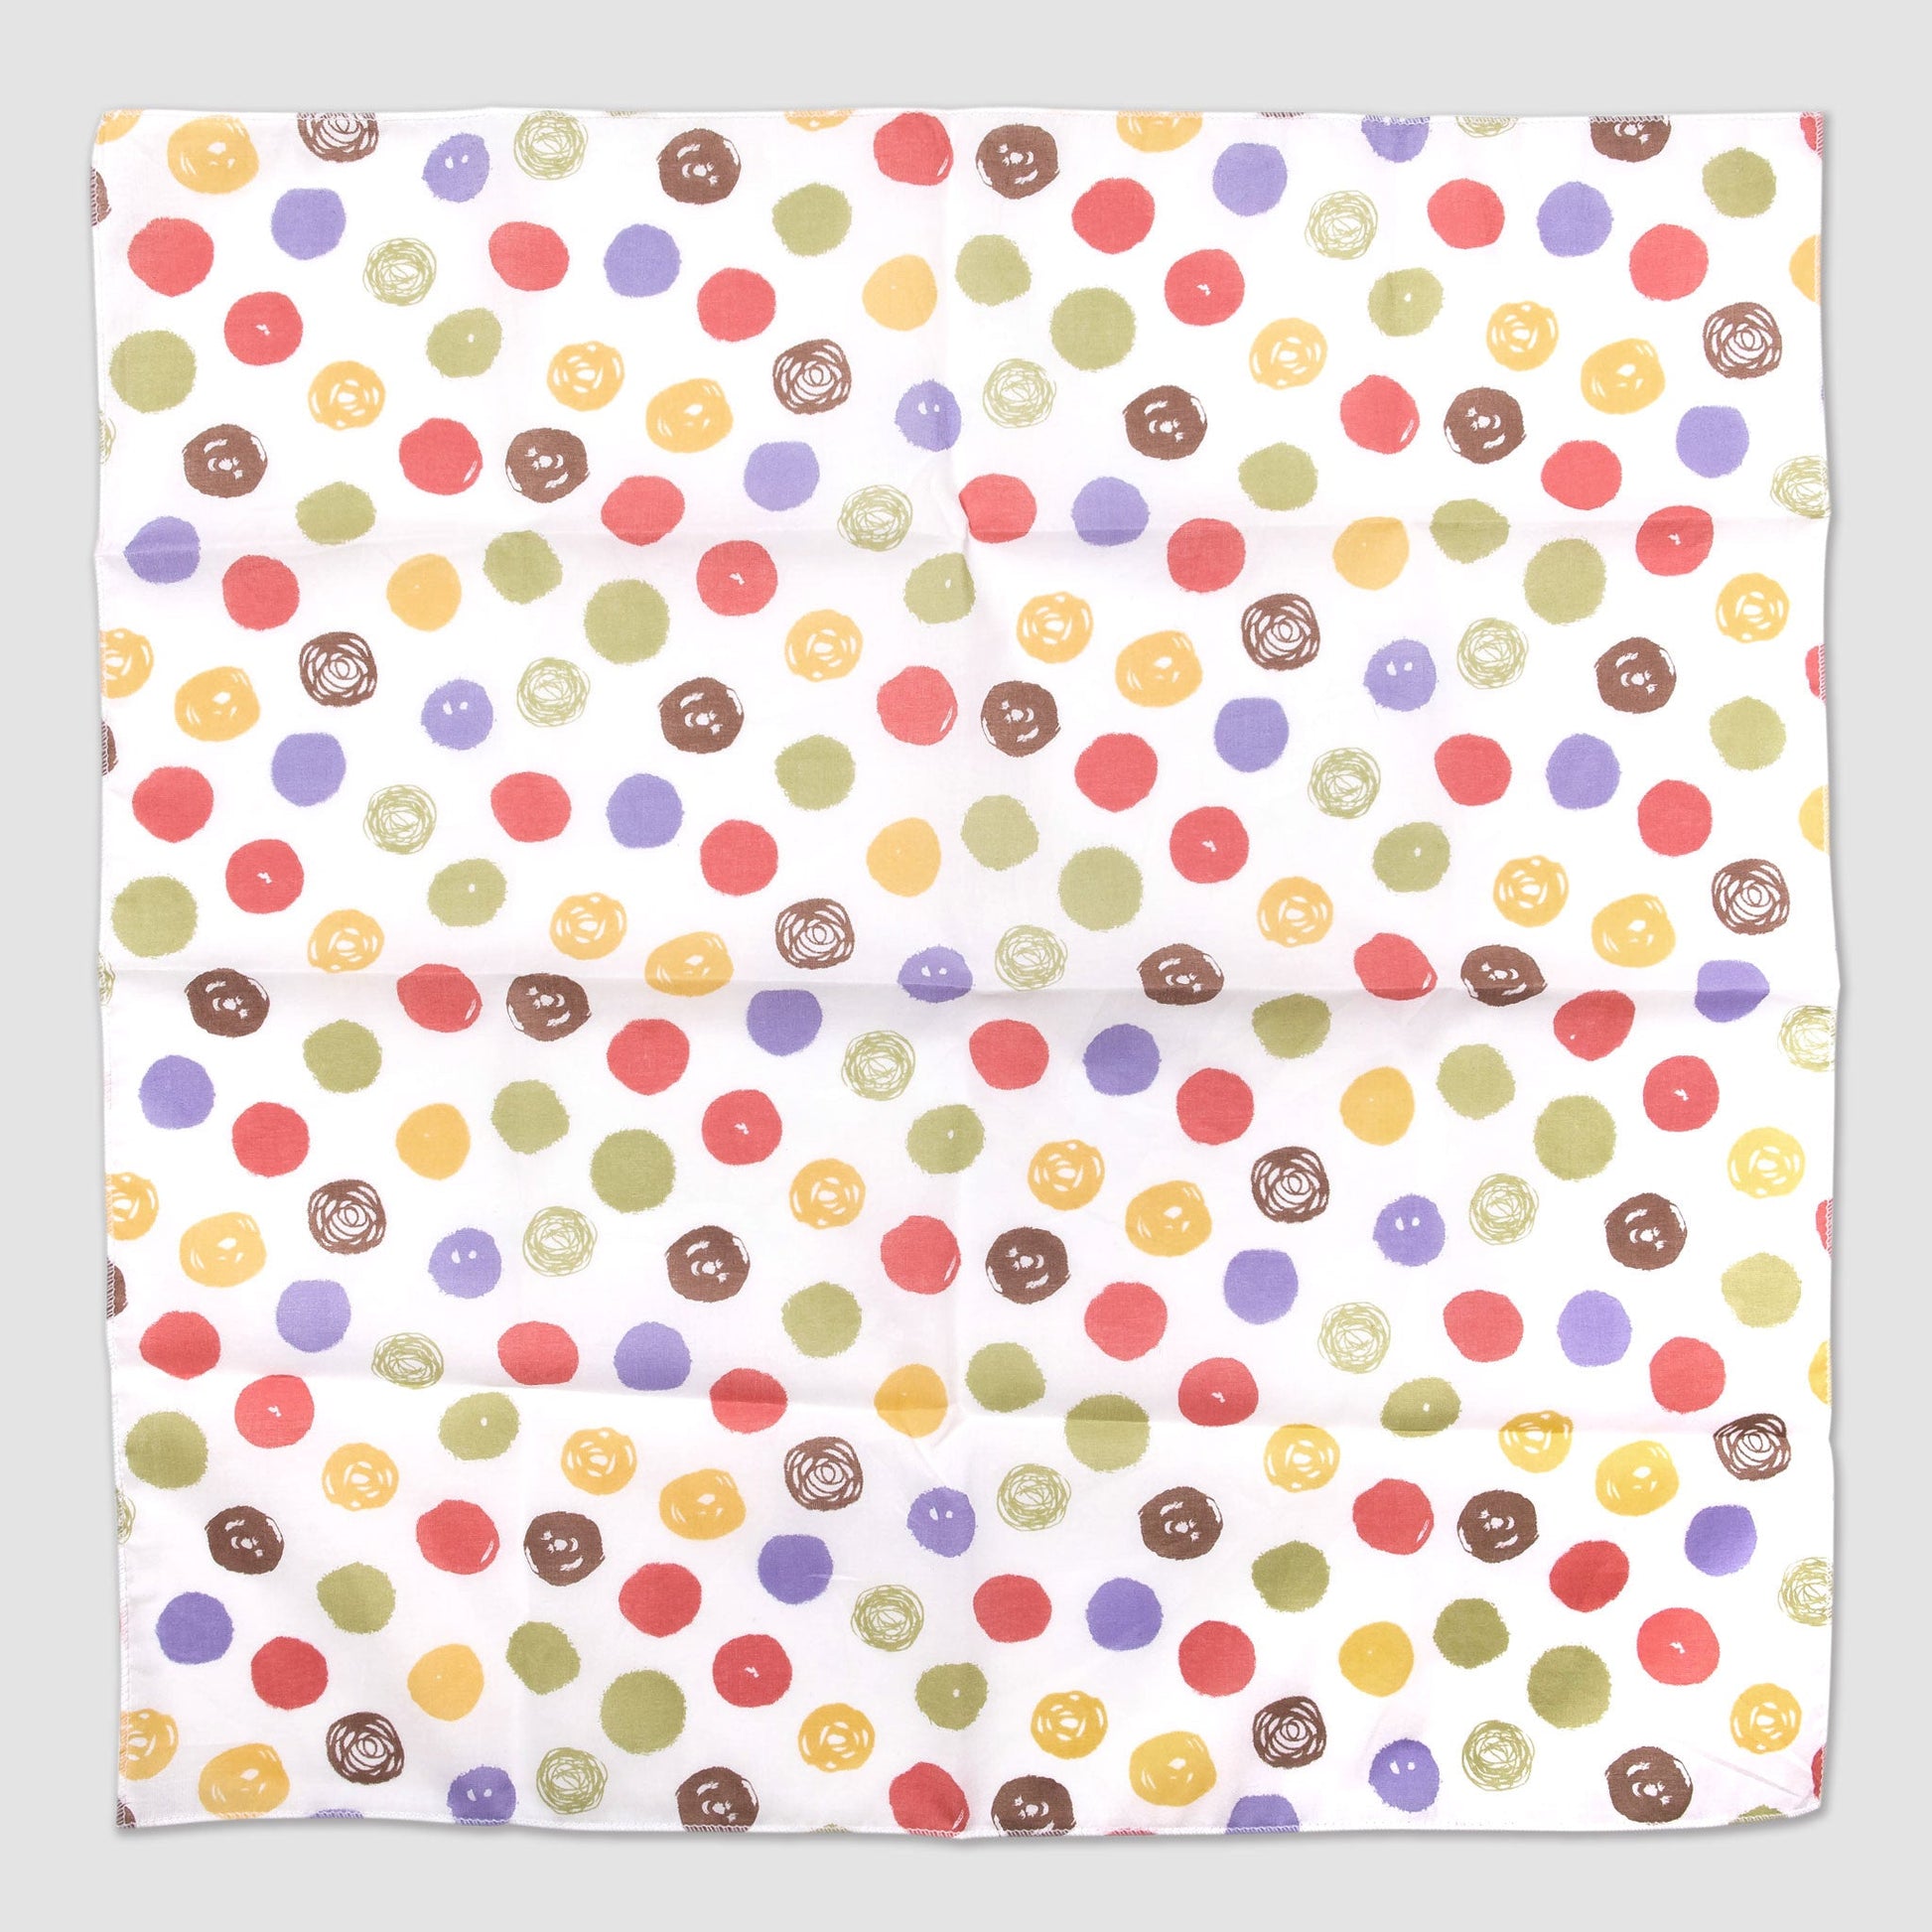 Jumbo Dot Print Cotton Scarf Colorful Flat